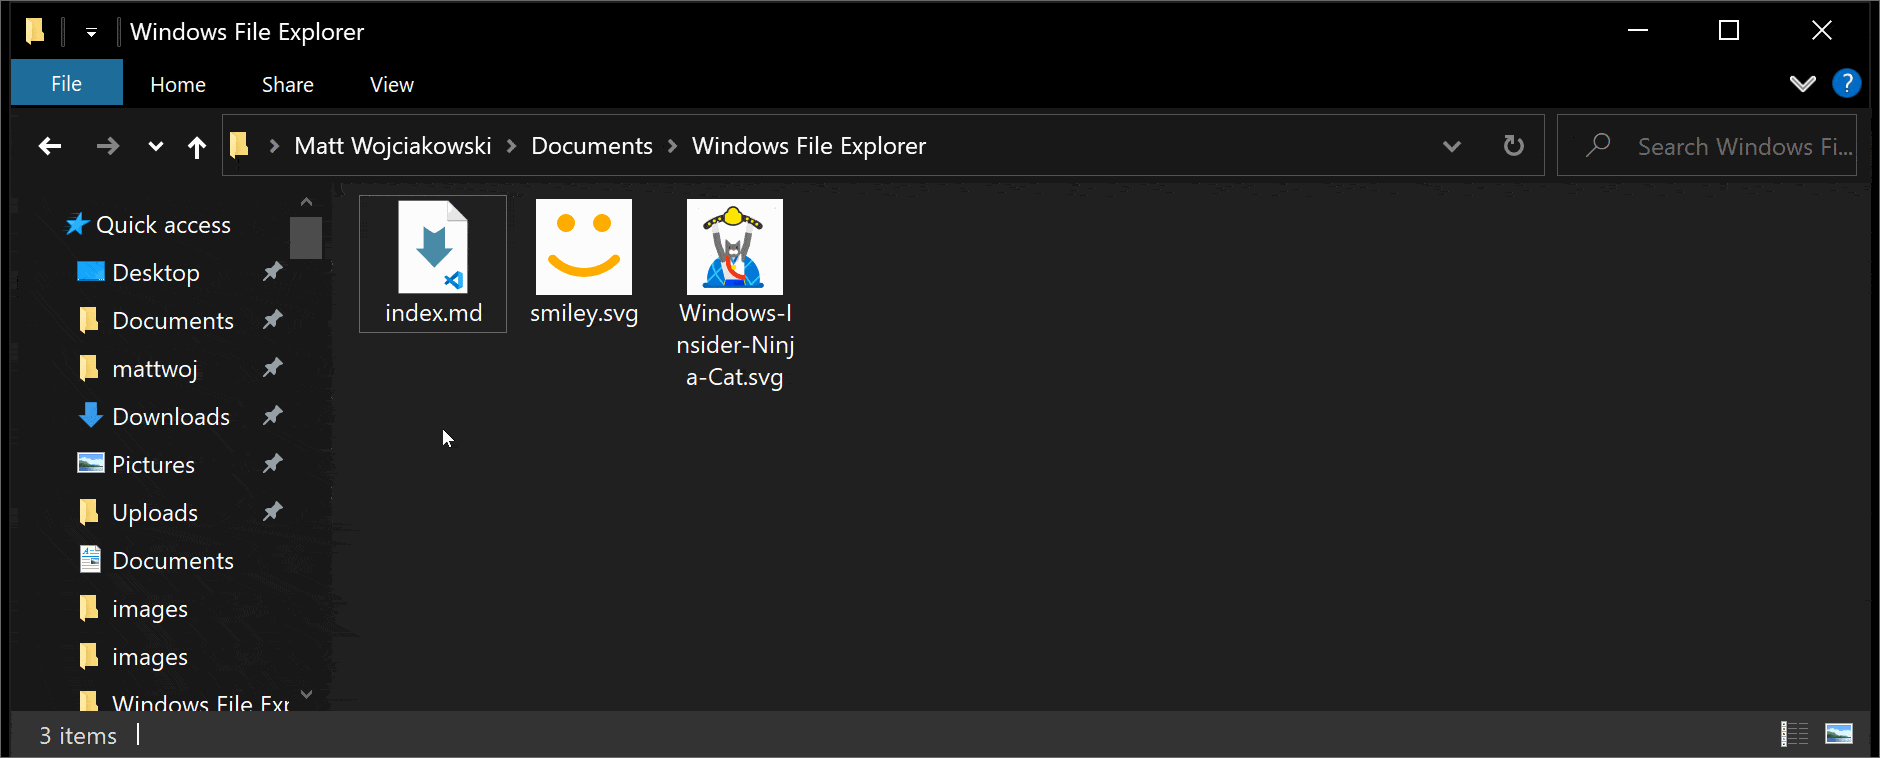 PowerToys Preview Pane demo for Windows 10.